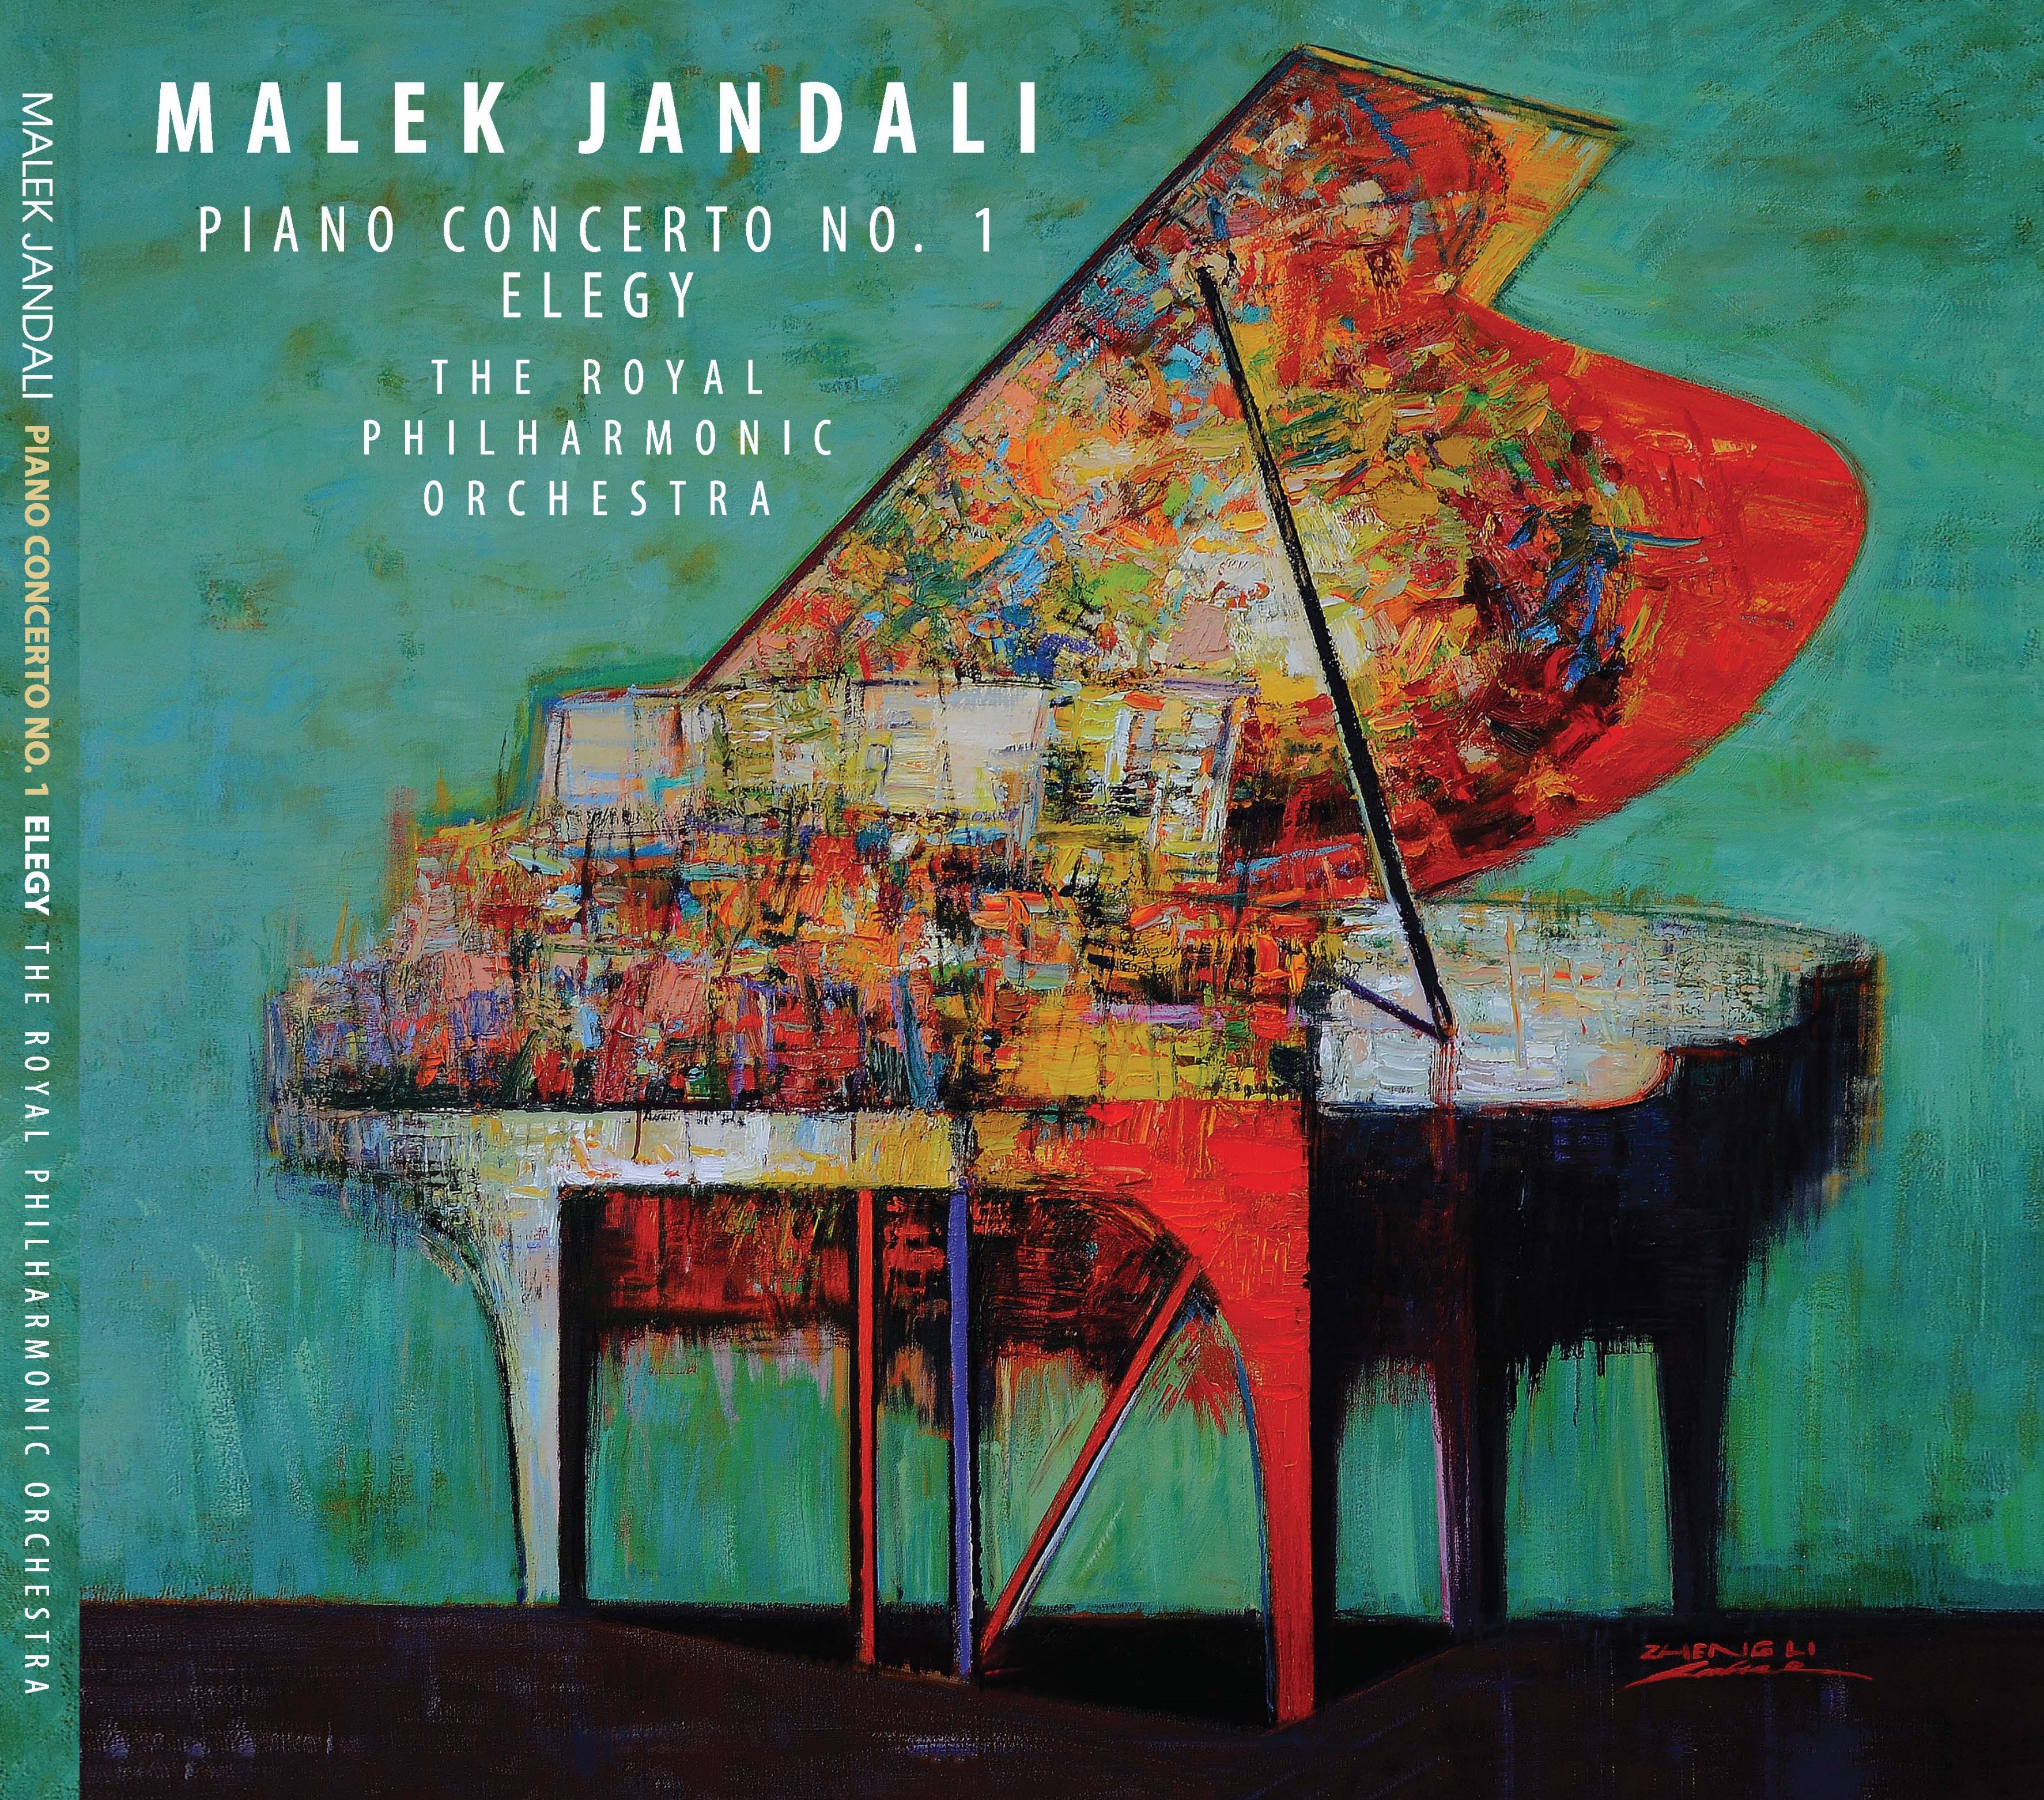 Cover des Albums "Piano Concerto No. 1 Elegy" von Malek Jandali (erschienen bei Soul b Music)